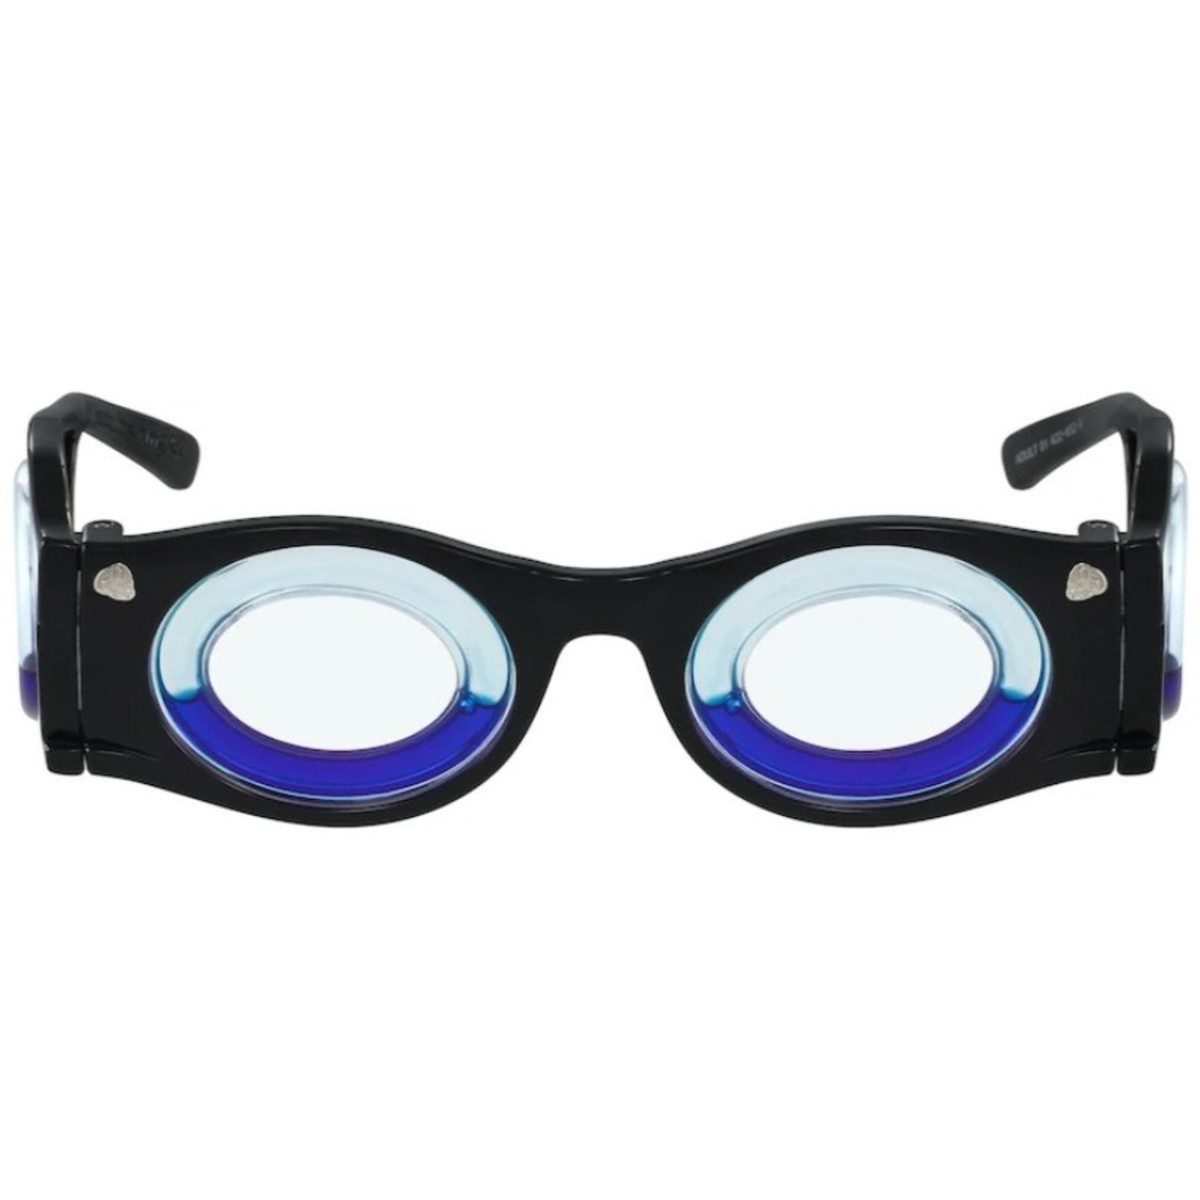 CES 2021: Boardingglasögon, franska glasögon mot åksjuka